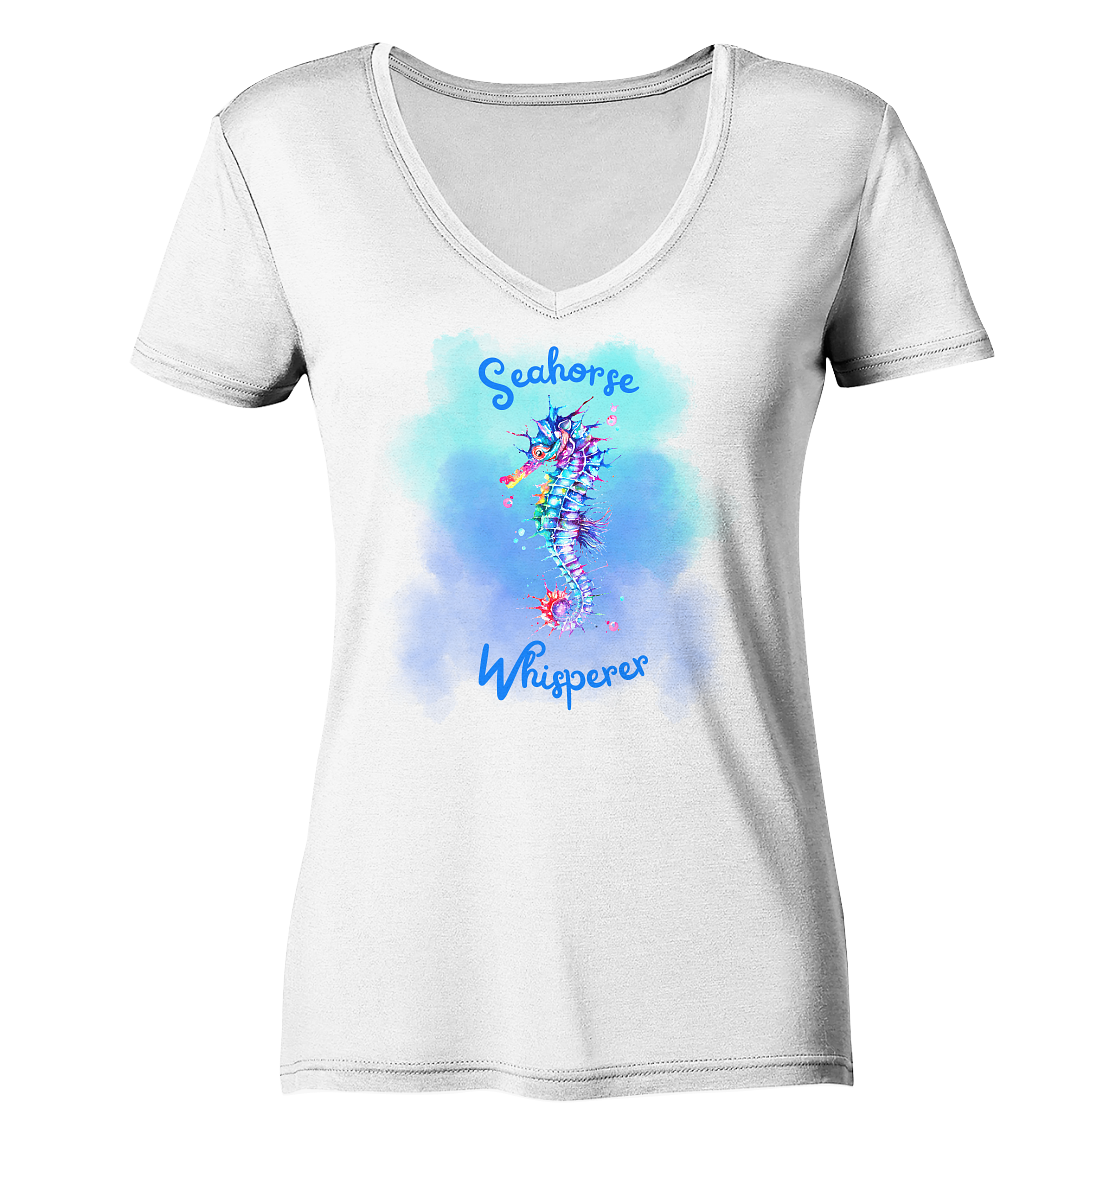 Seahorse Whisperer  - Ladies Organic V-Neck Shirt